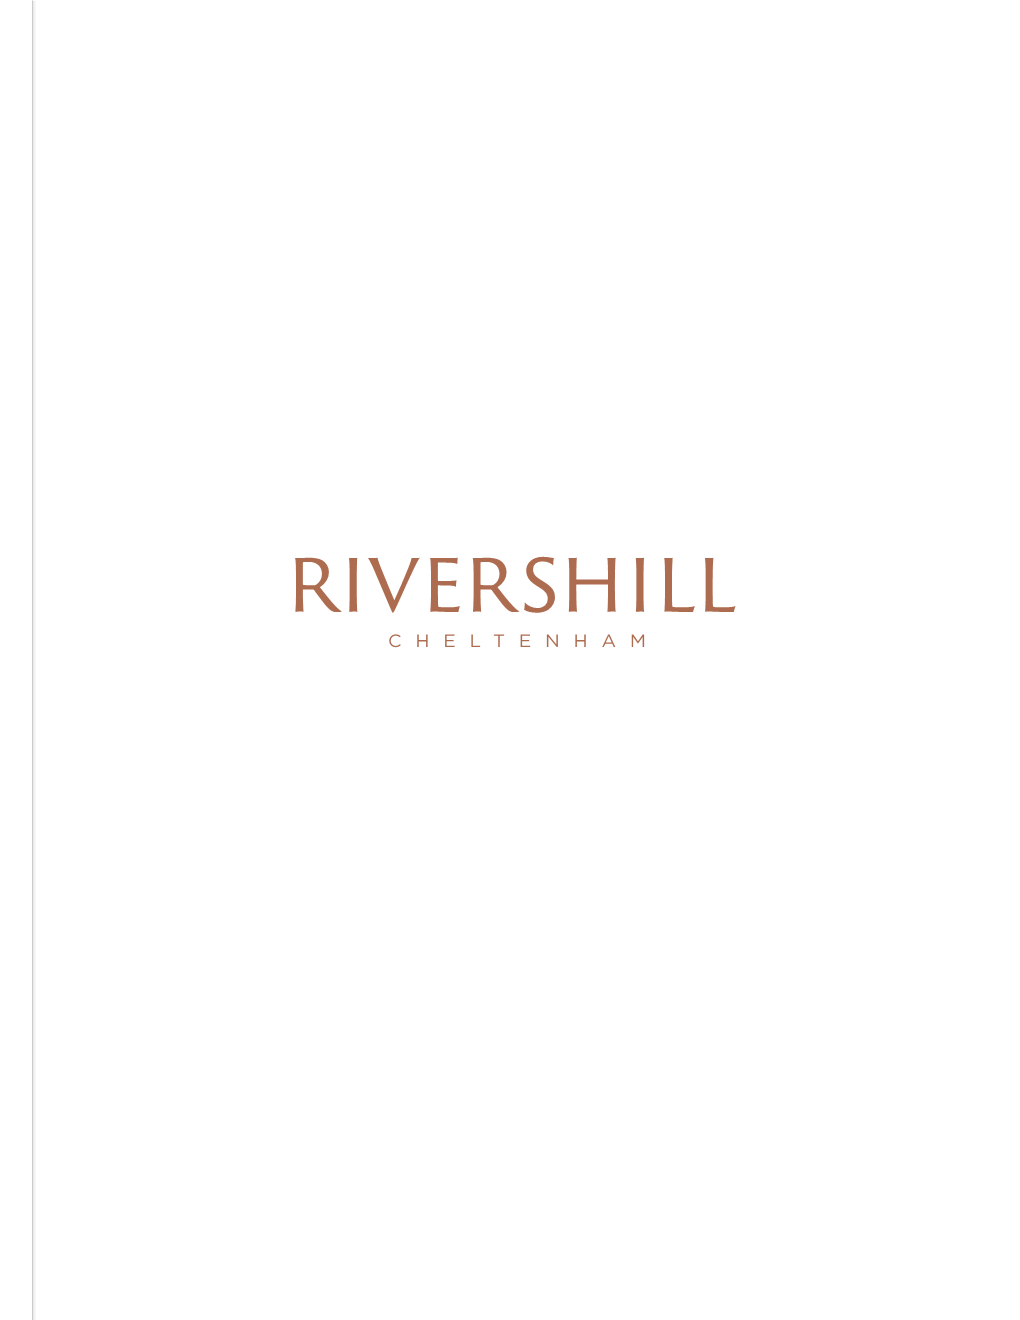 Rivershill-Cheltenham-2020 03 27